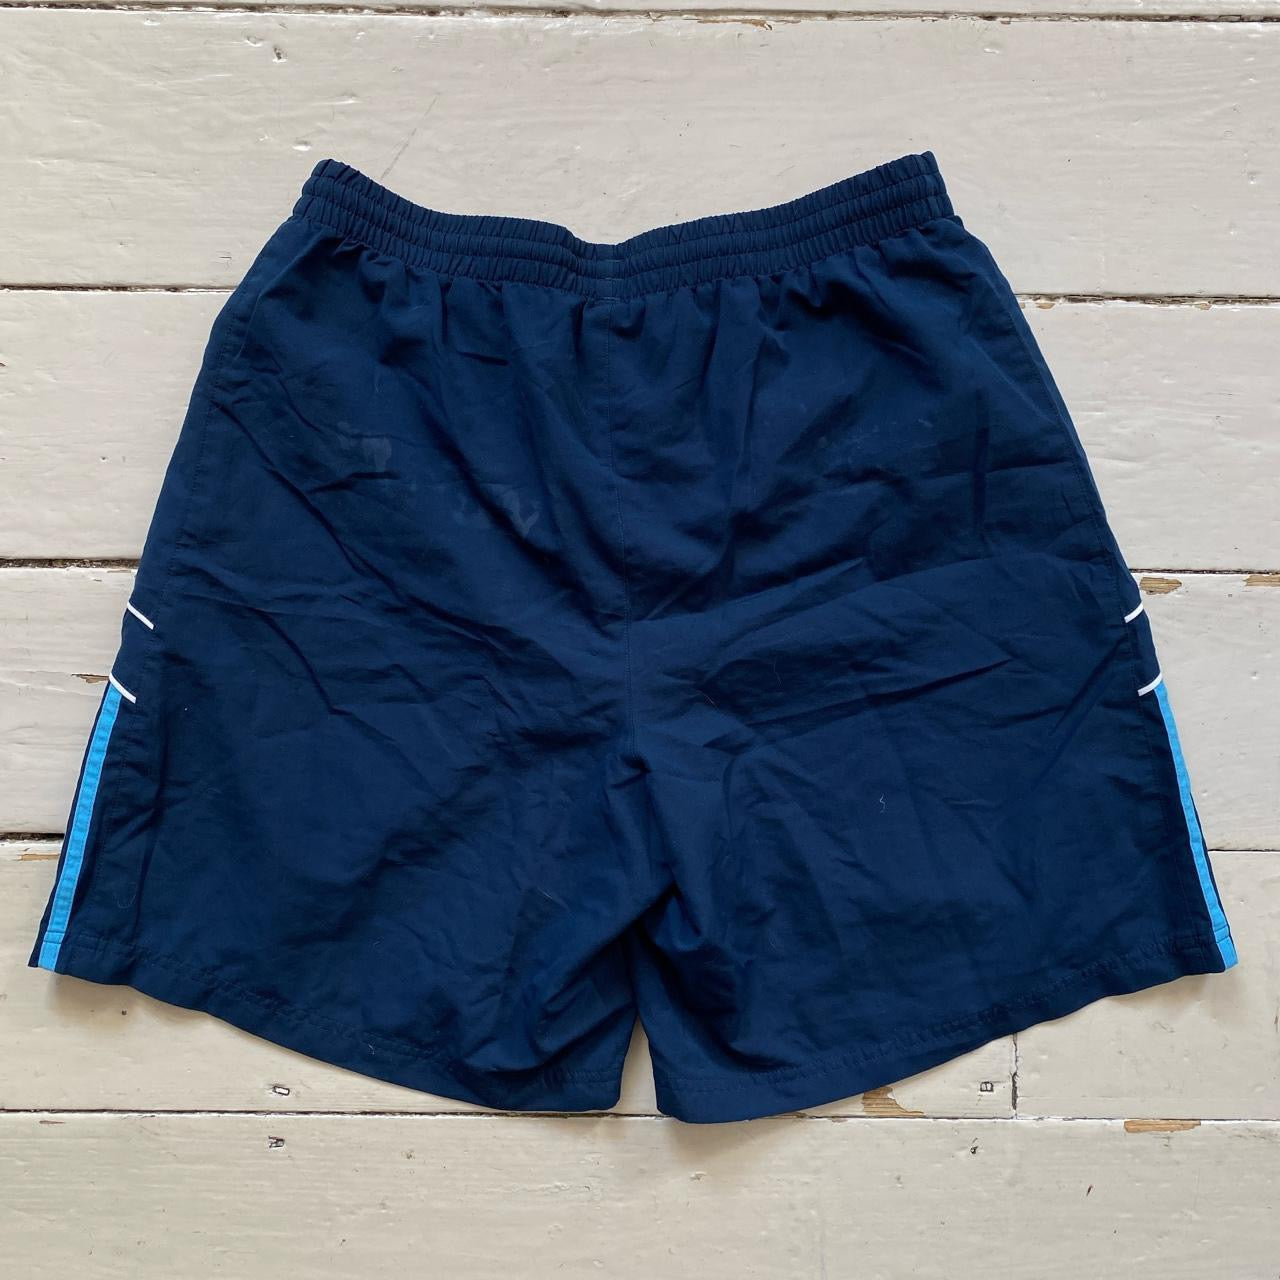 Adidas Navy Shell Shorts (34W)